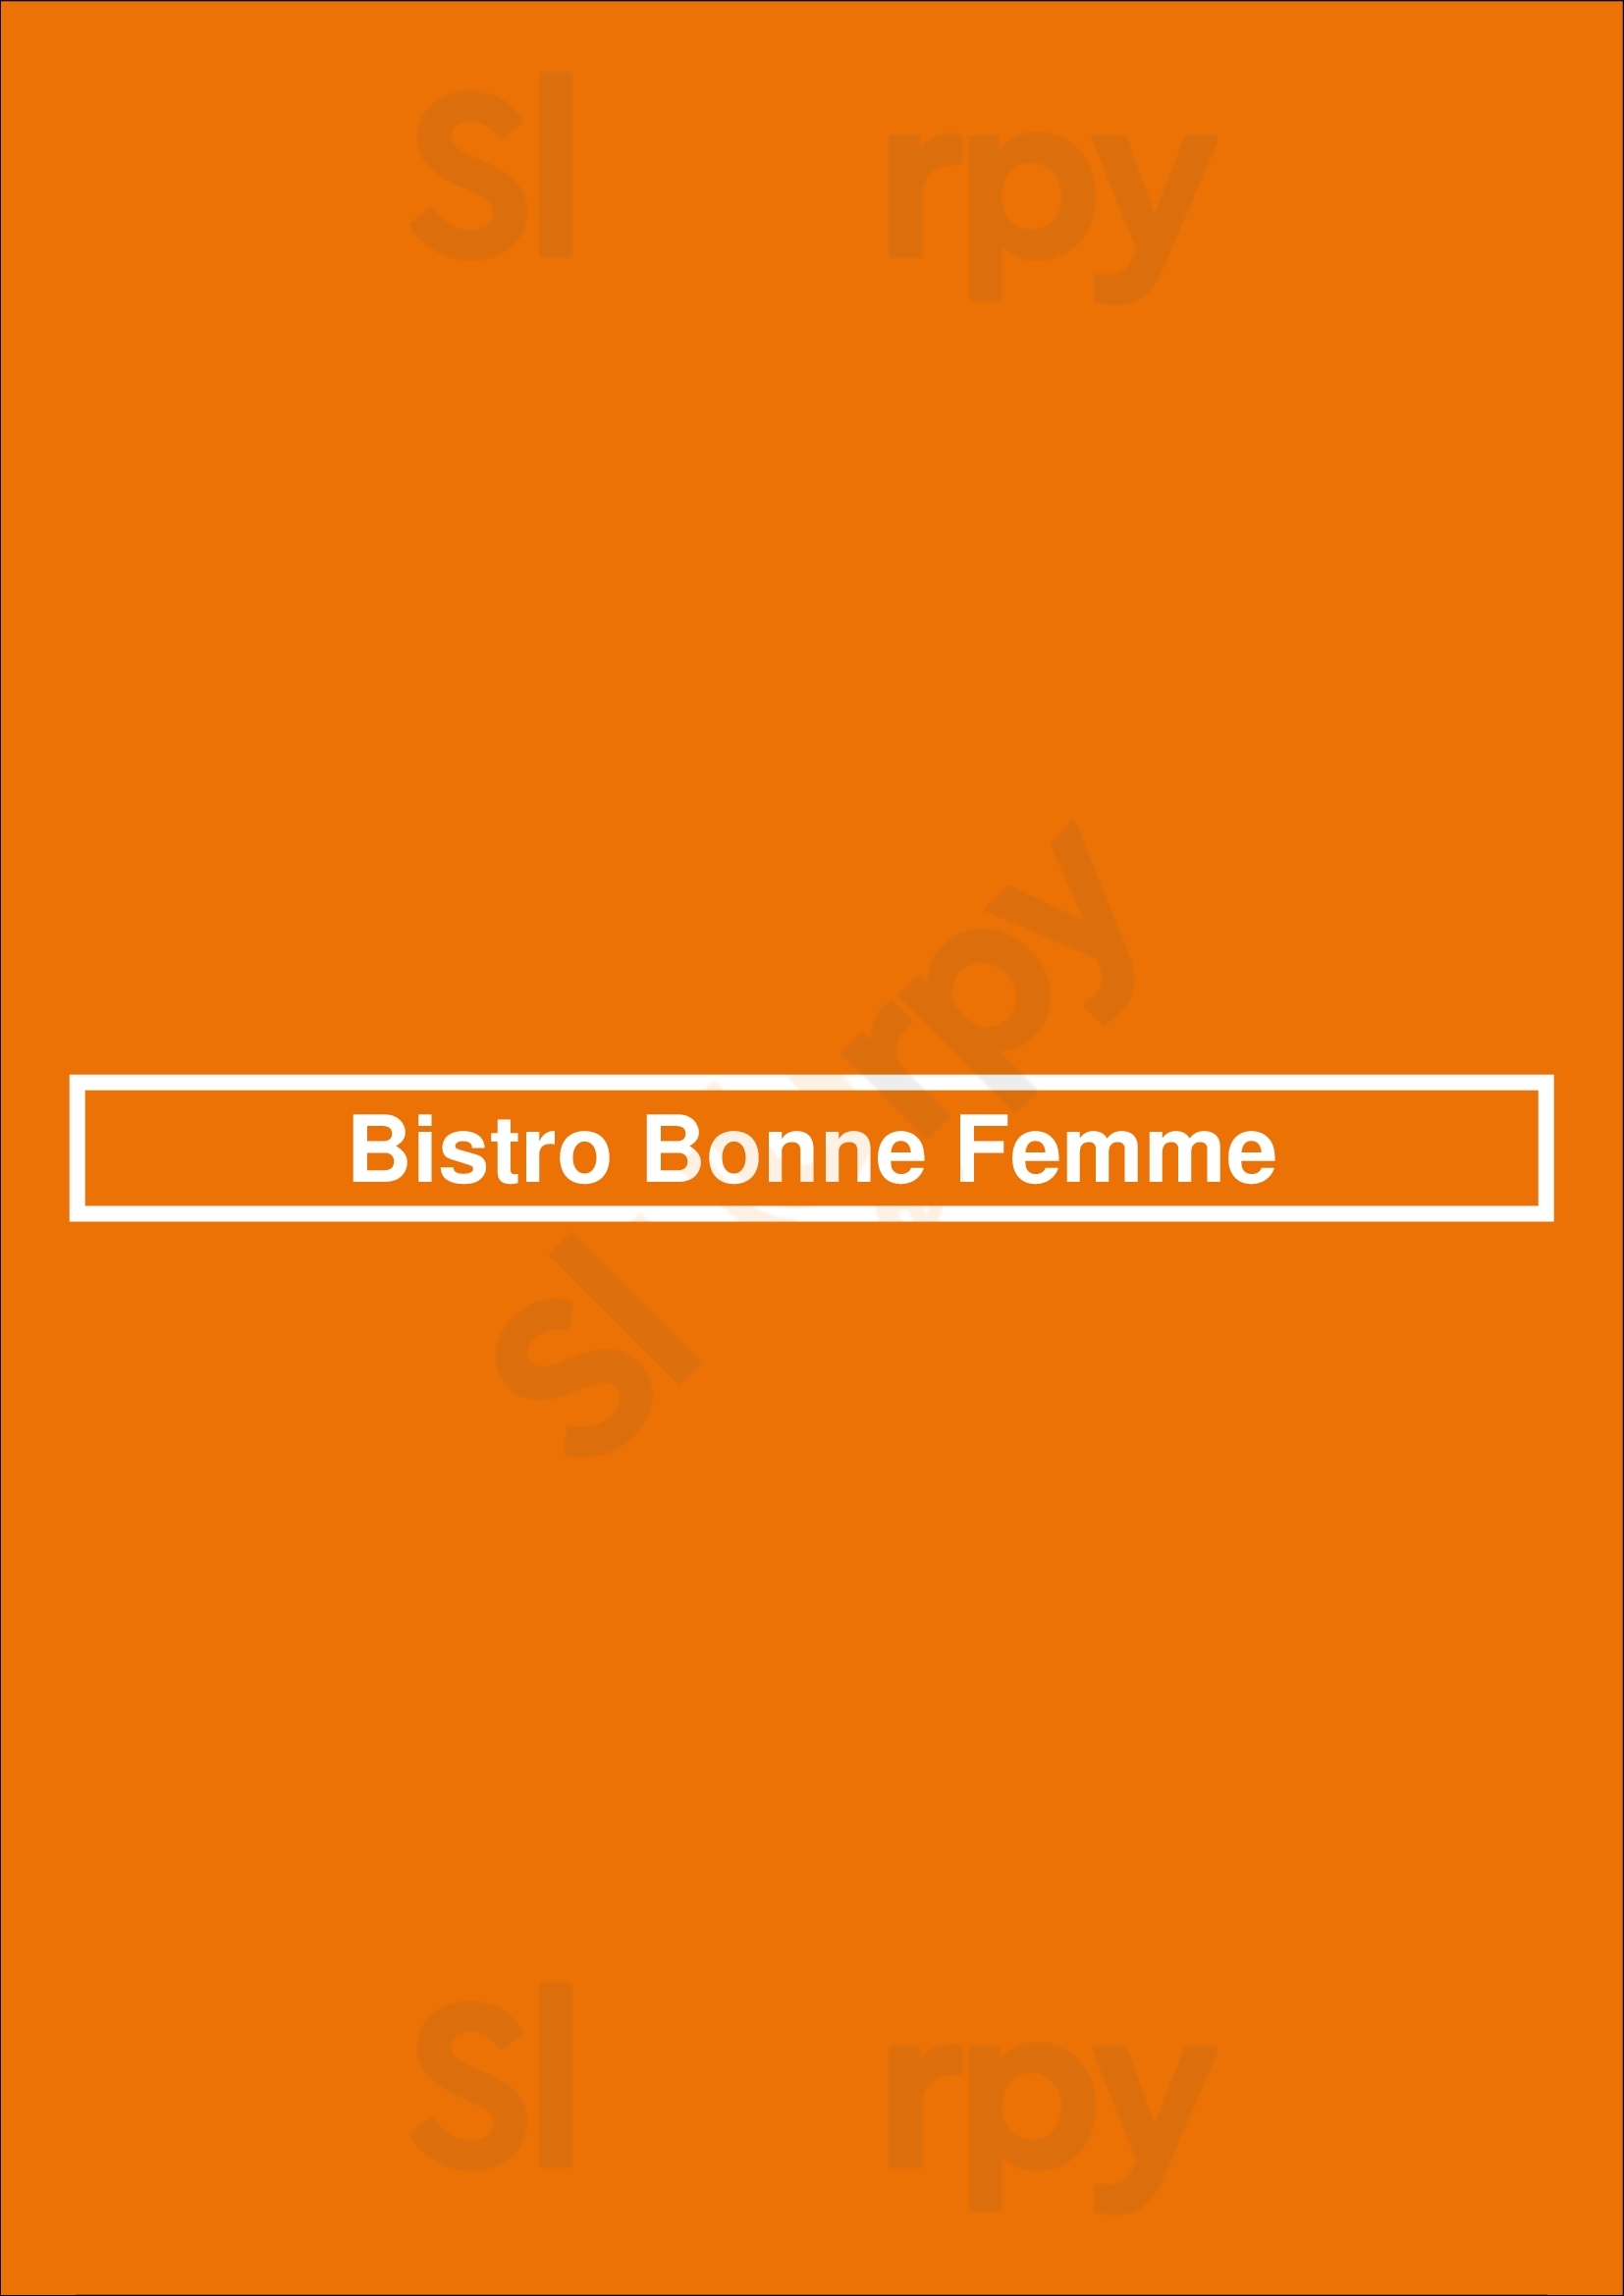 Bistro Bonne Femme Zwolle Menu - 1